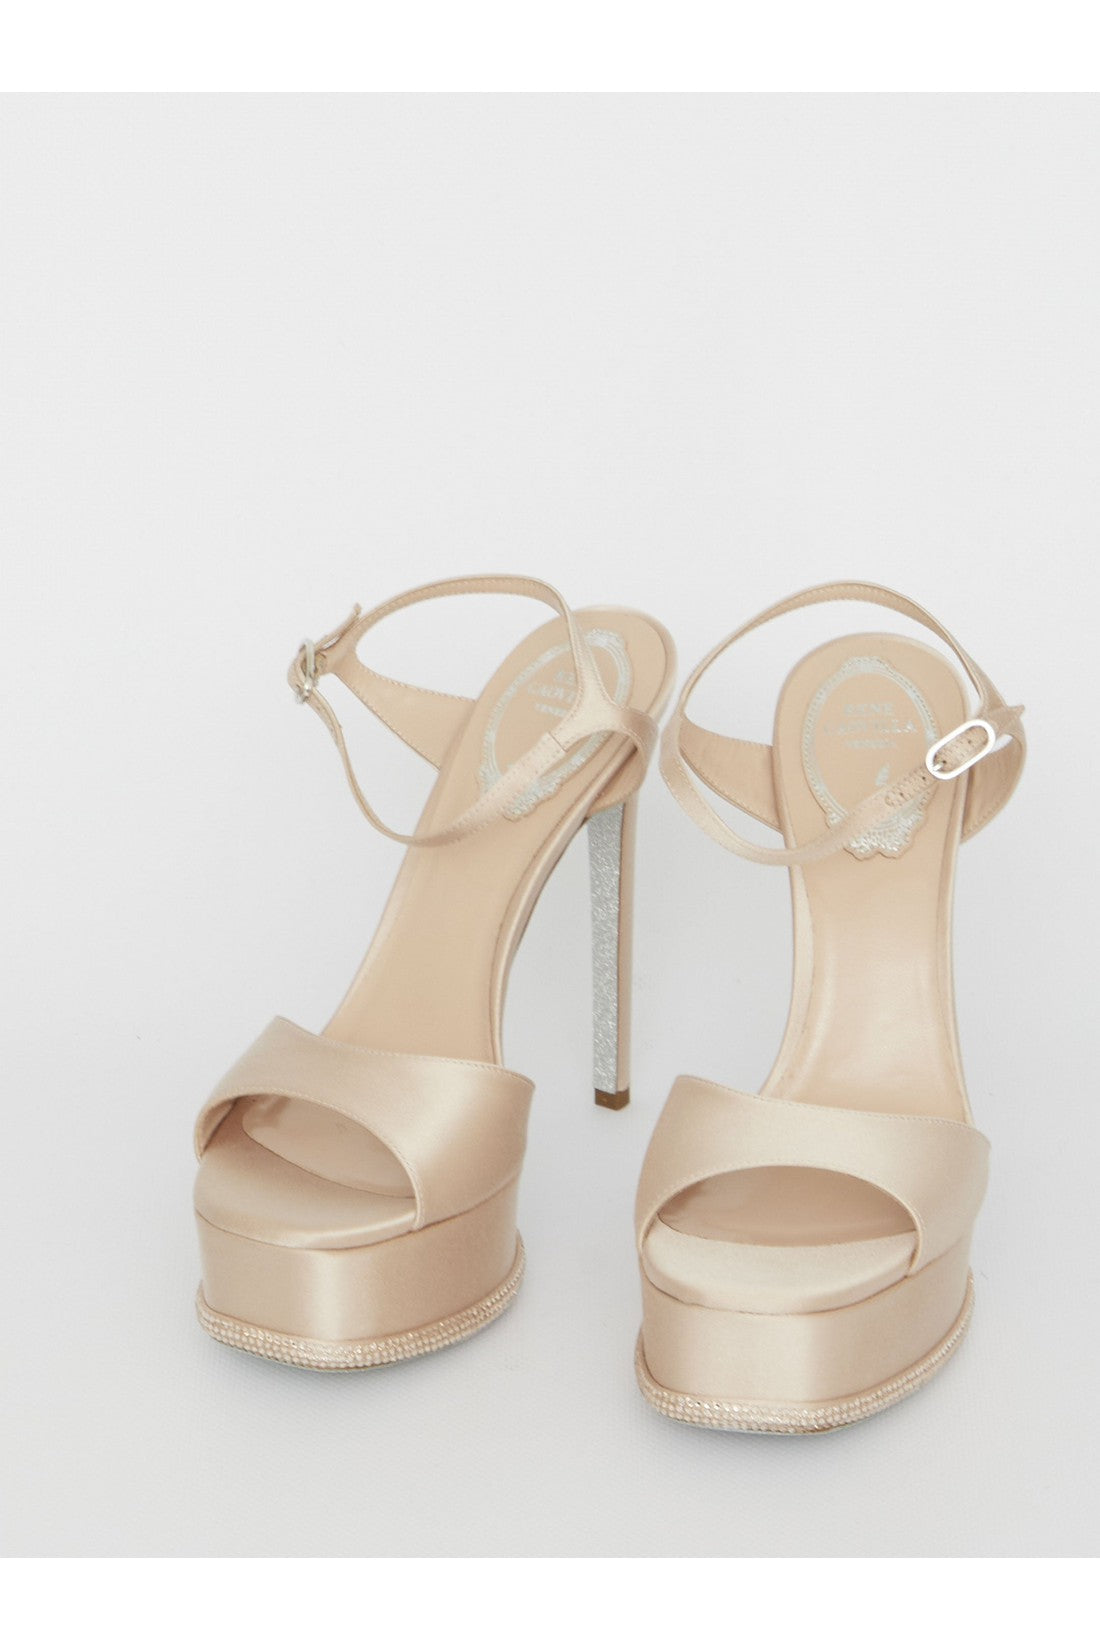 Anastasia sandals